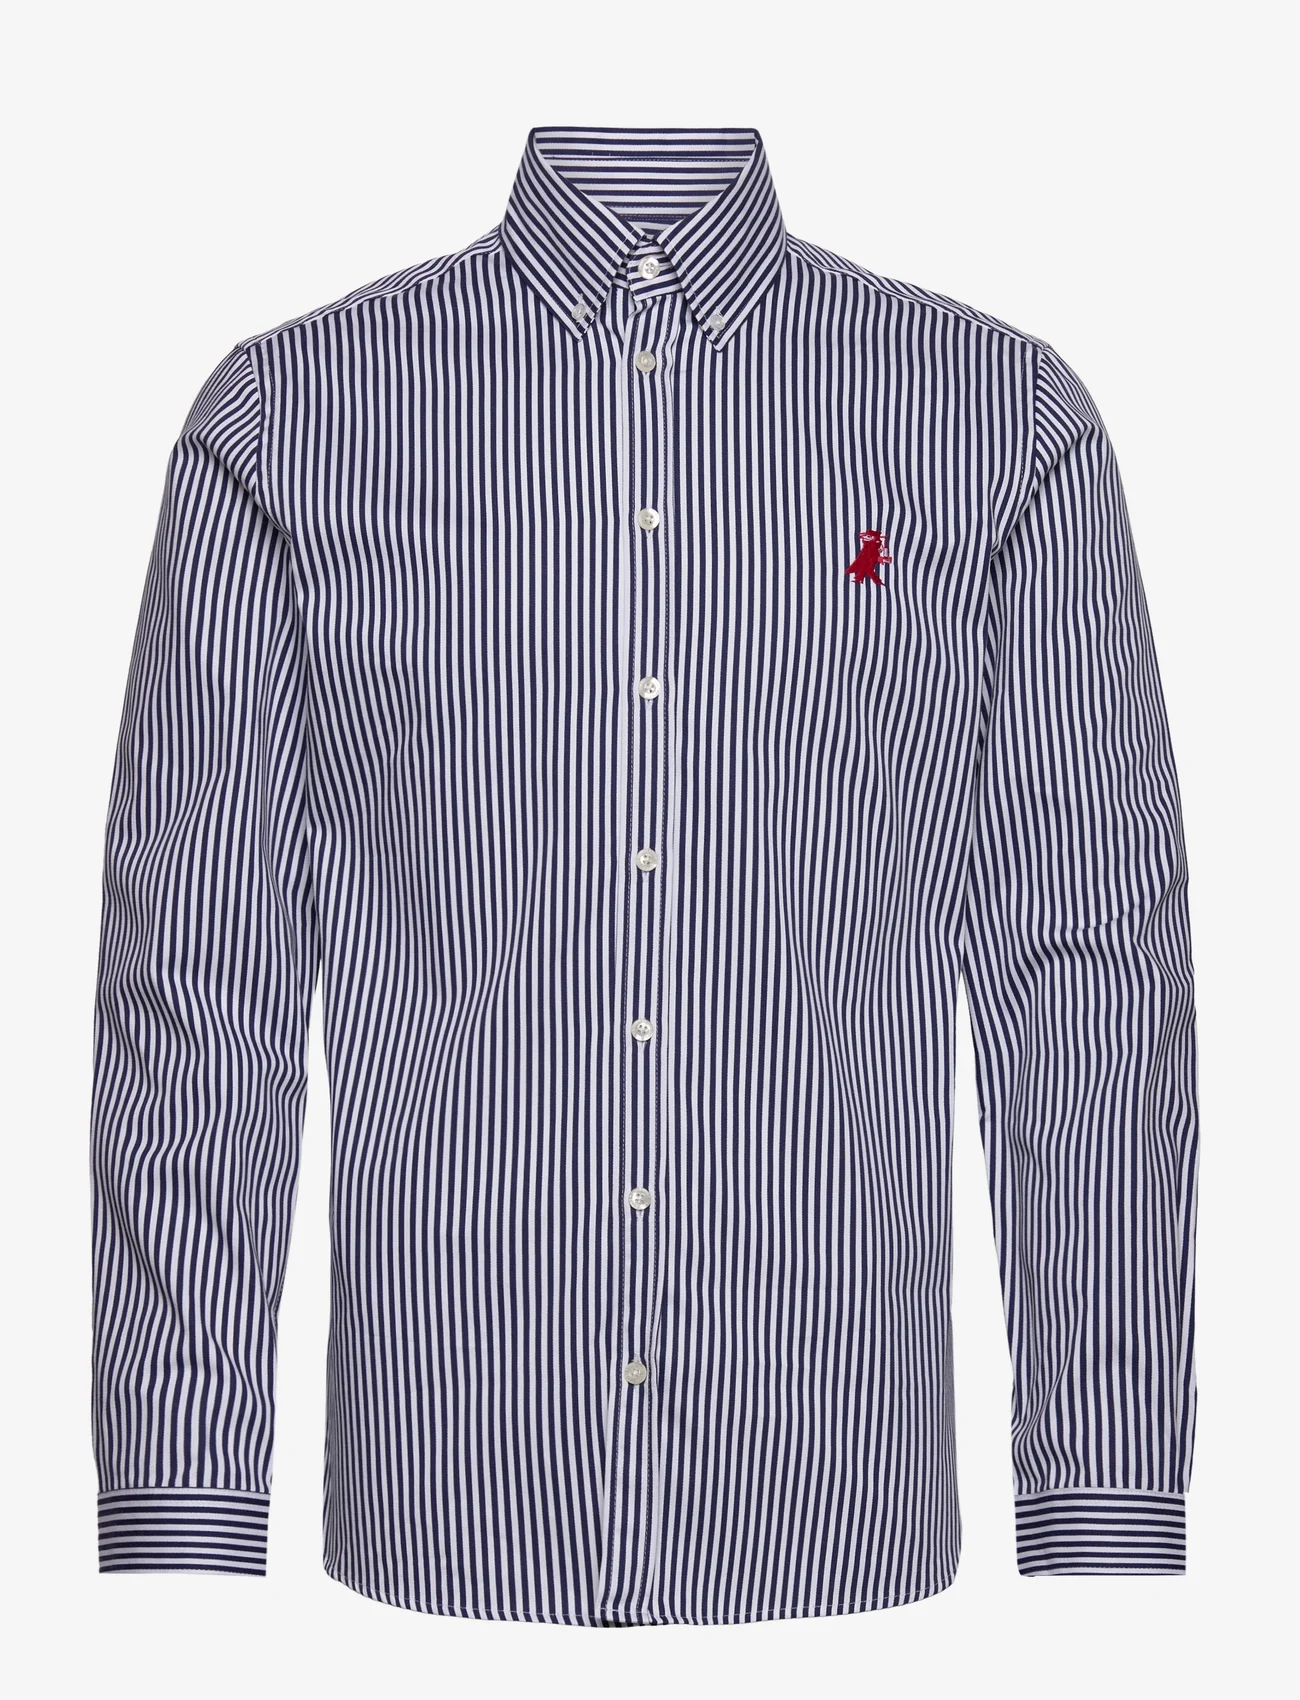 Libertine-Libertine - Voleur Shirt - businesskjorter - white & navy stripe - 0